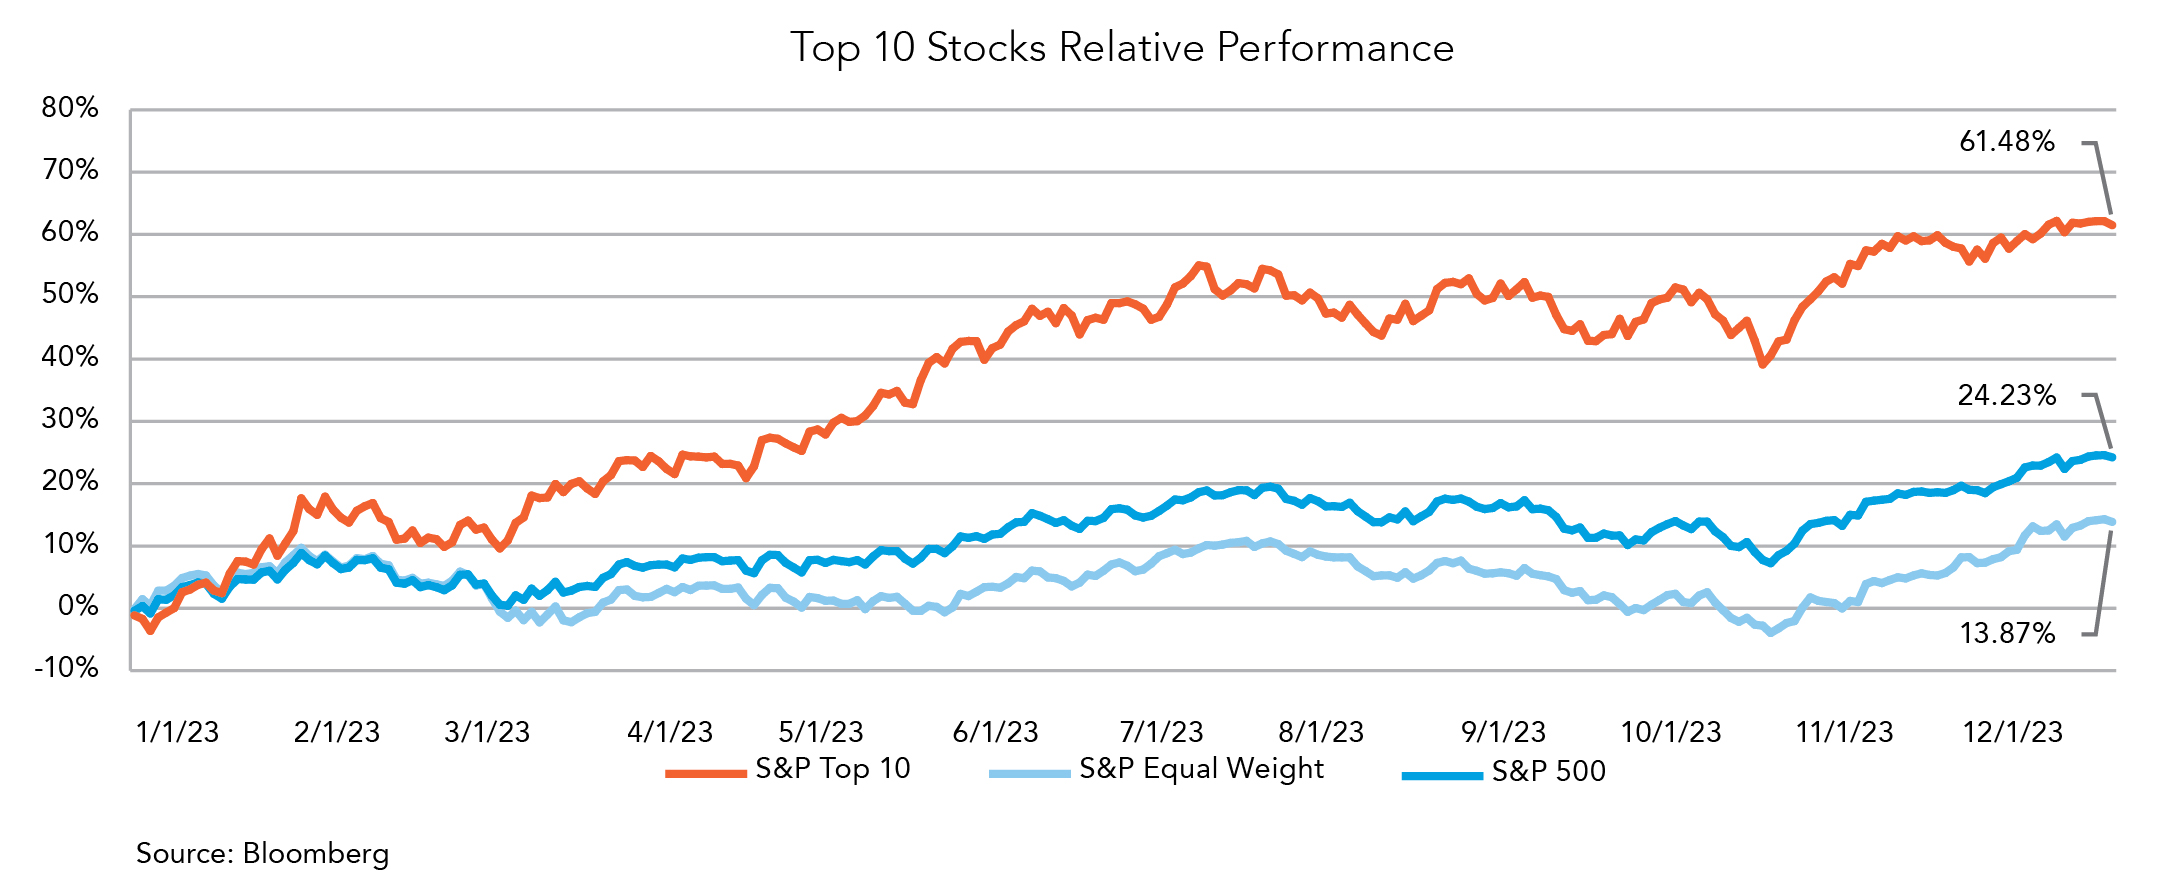 Top 10 Stocks Relative Performance